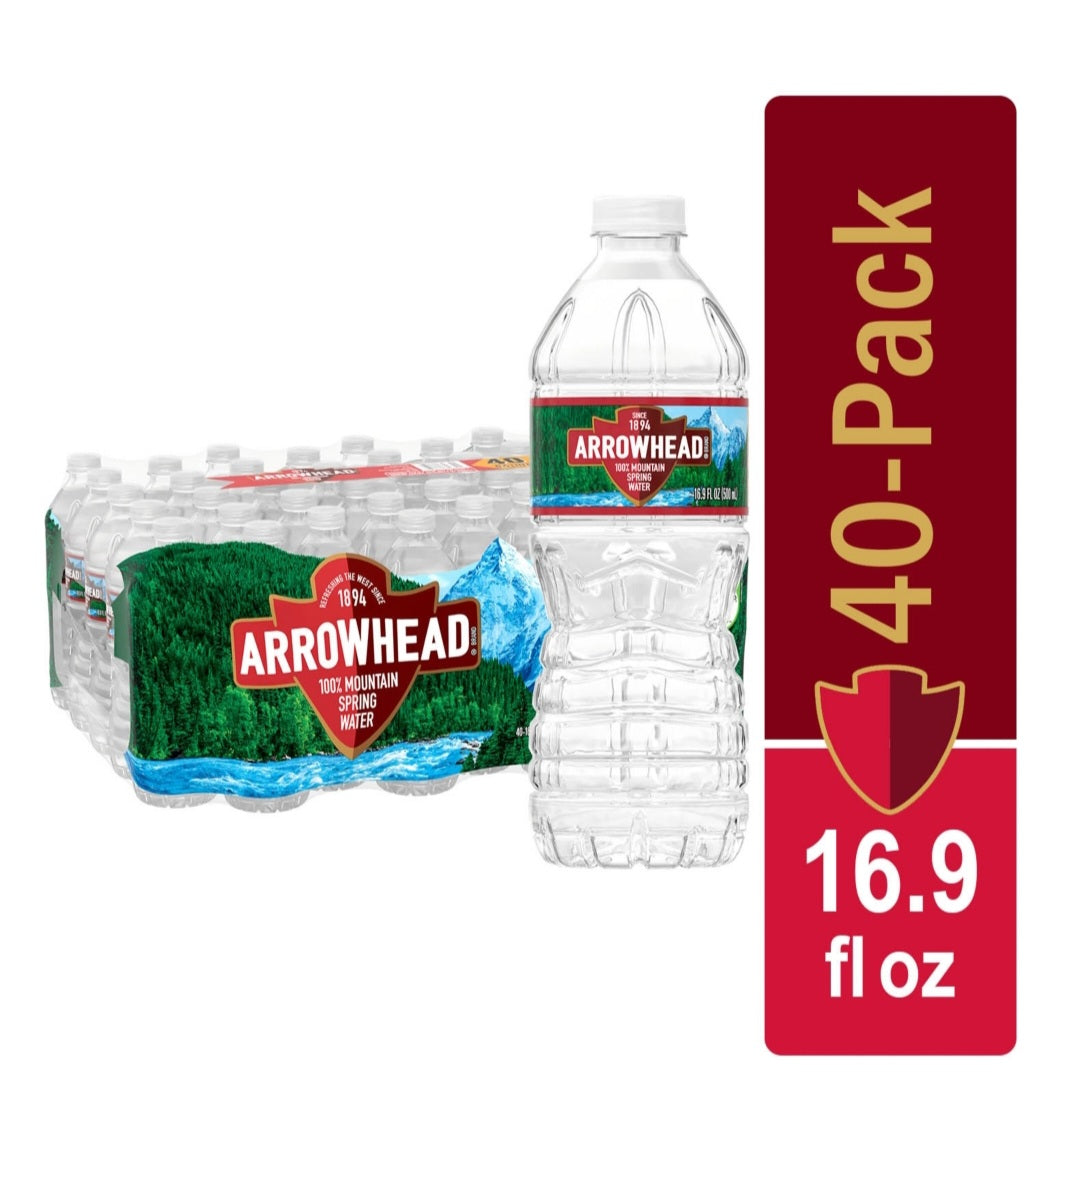 Arrowhead 100% Mountain Spring Water (Full Pallet)